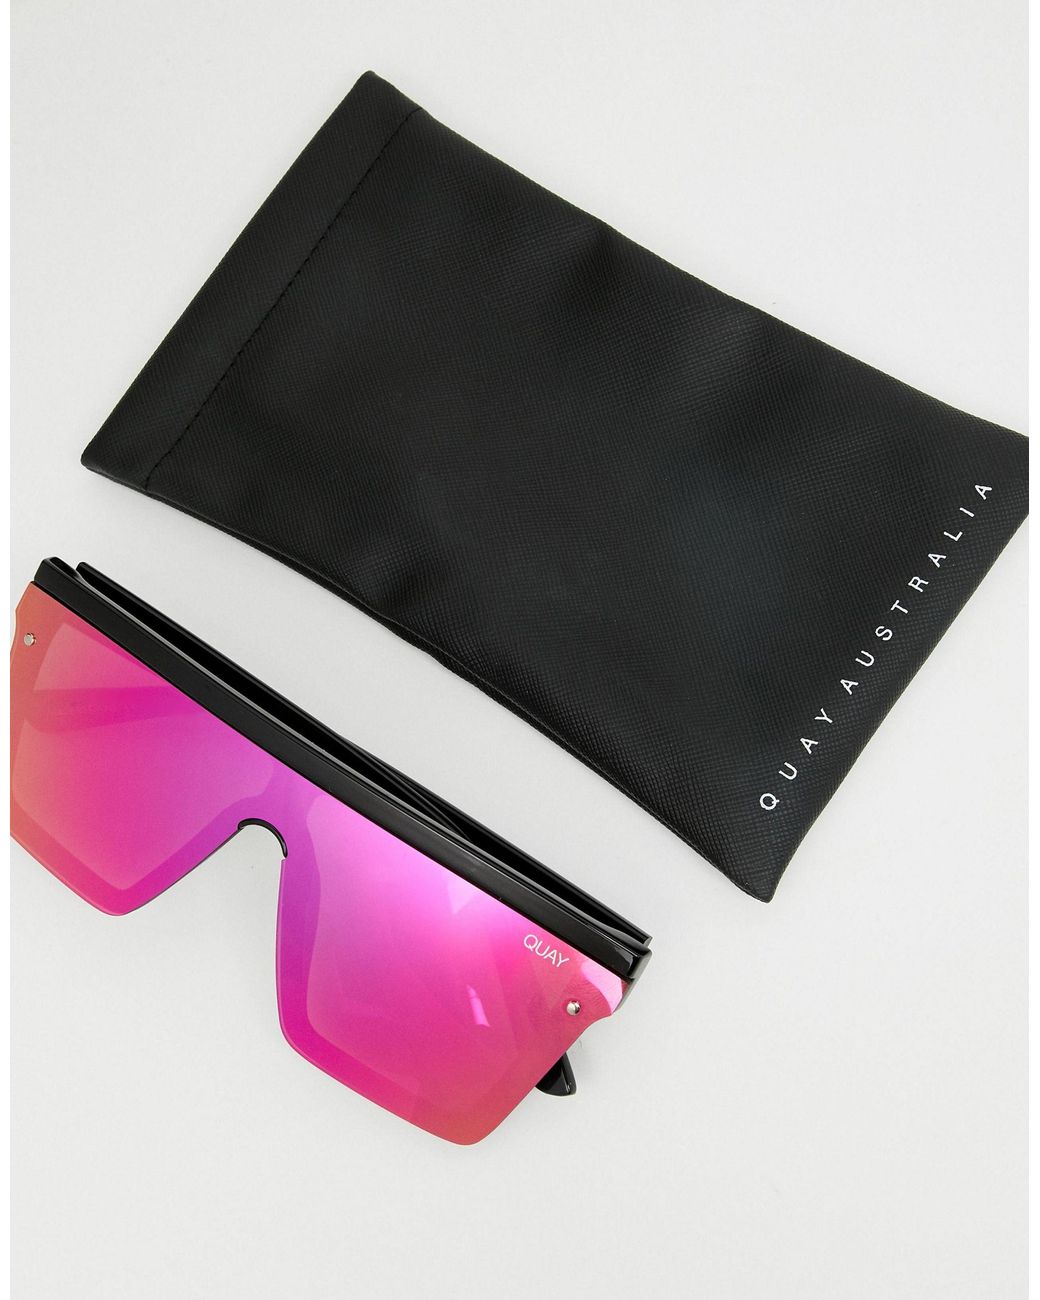 Quay Hindsight Sunglasses - Shop on Pinterest